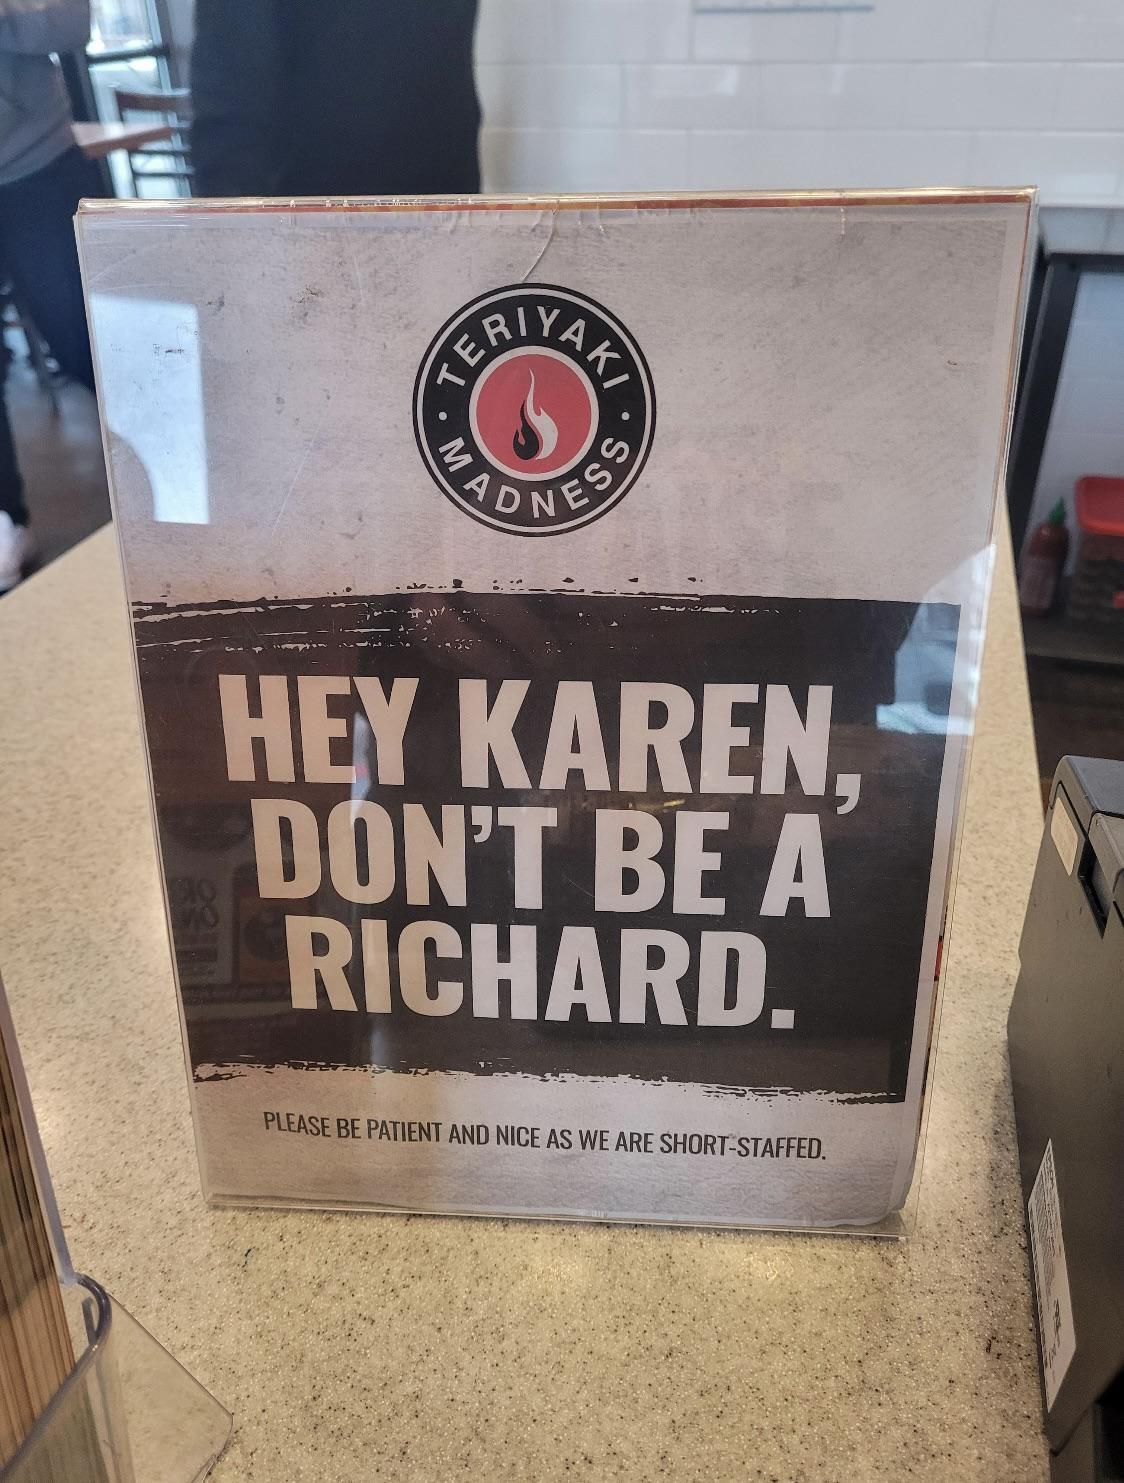 Don’t be a Richard.